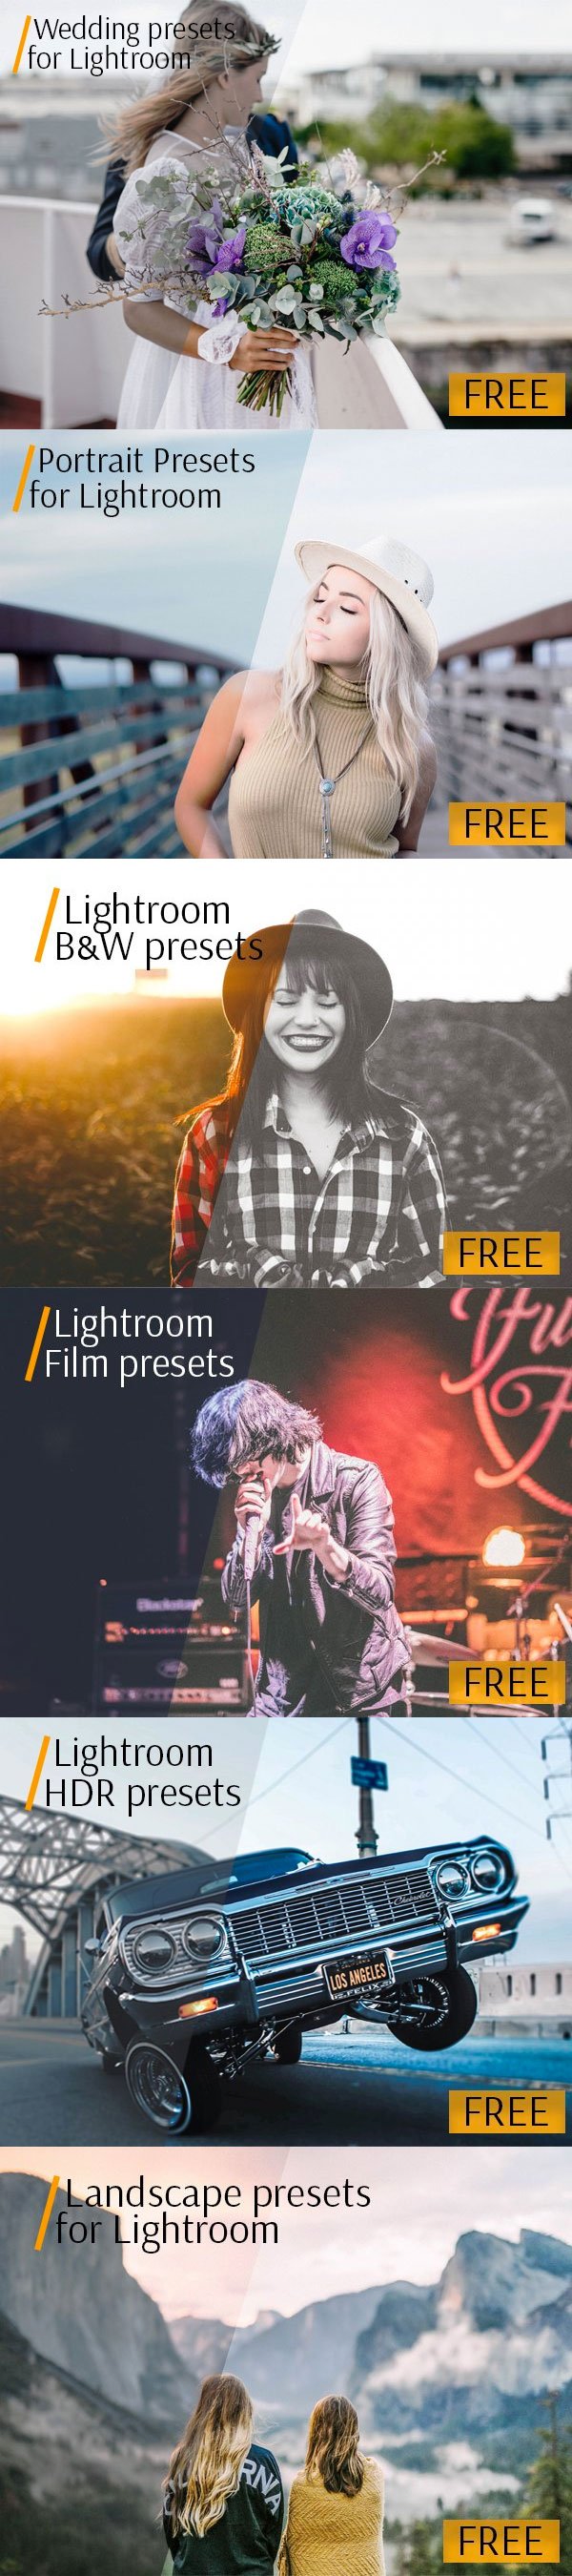 free professional lightroom presets